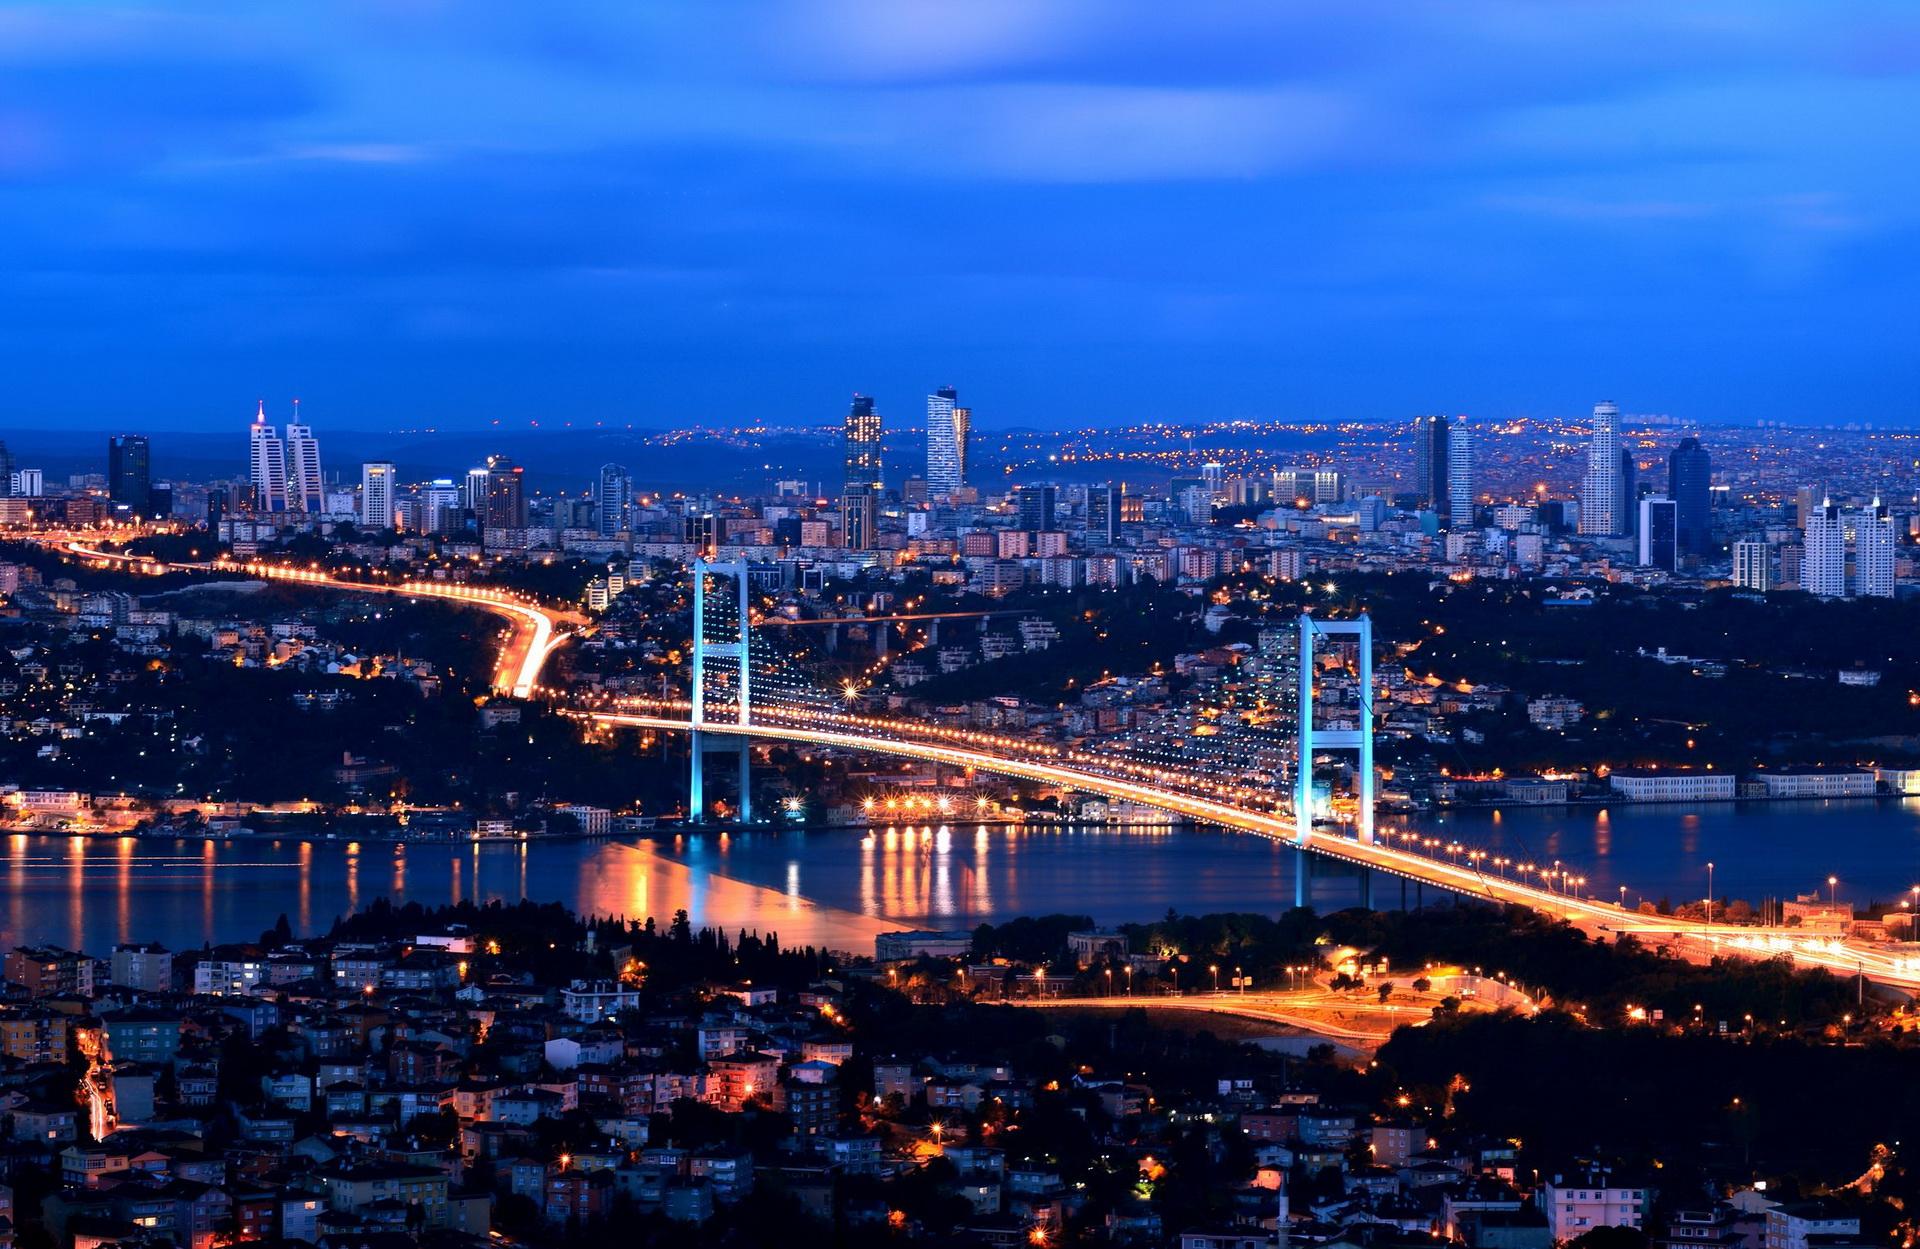 Fethedilemez güzellik: İstanbul!